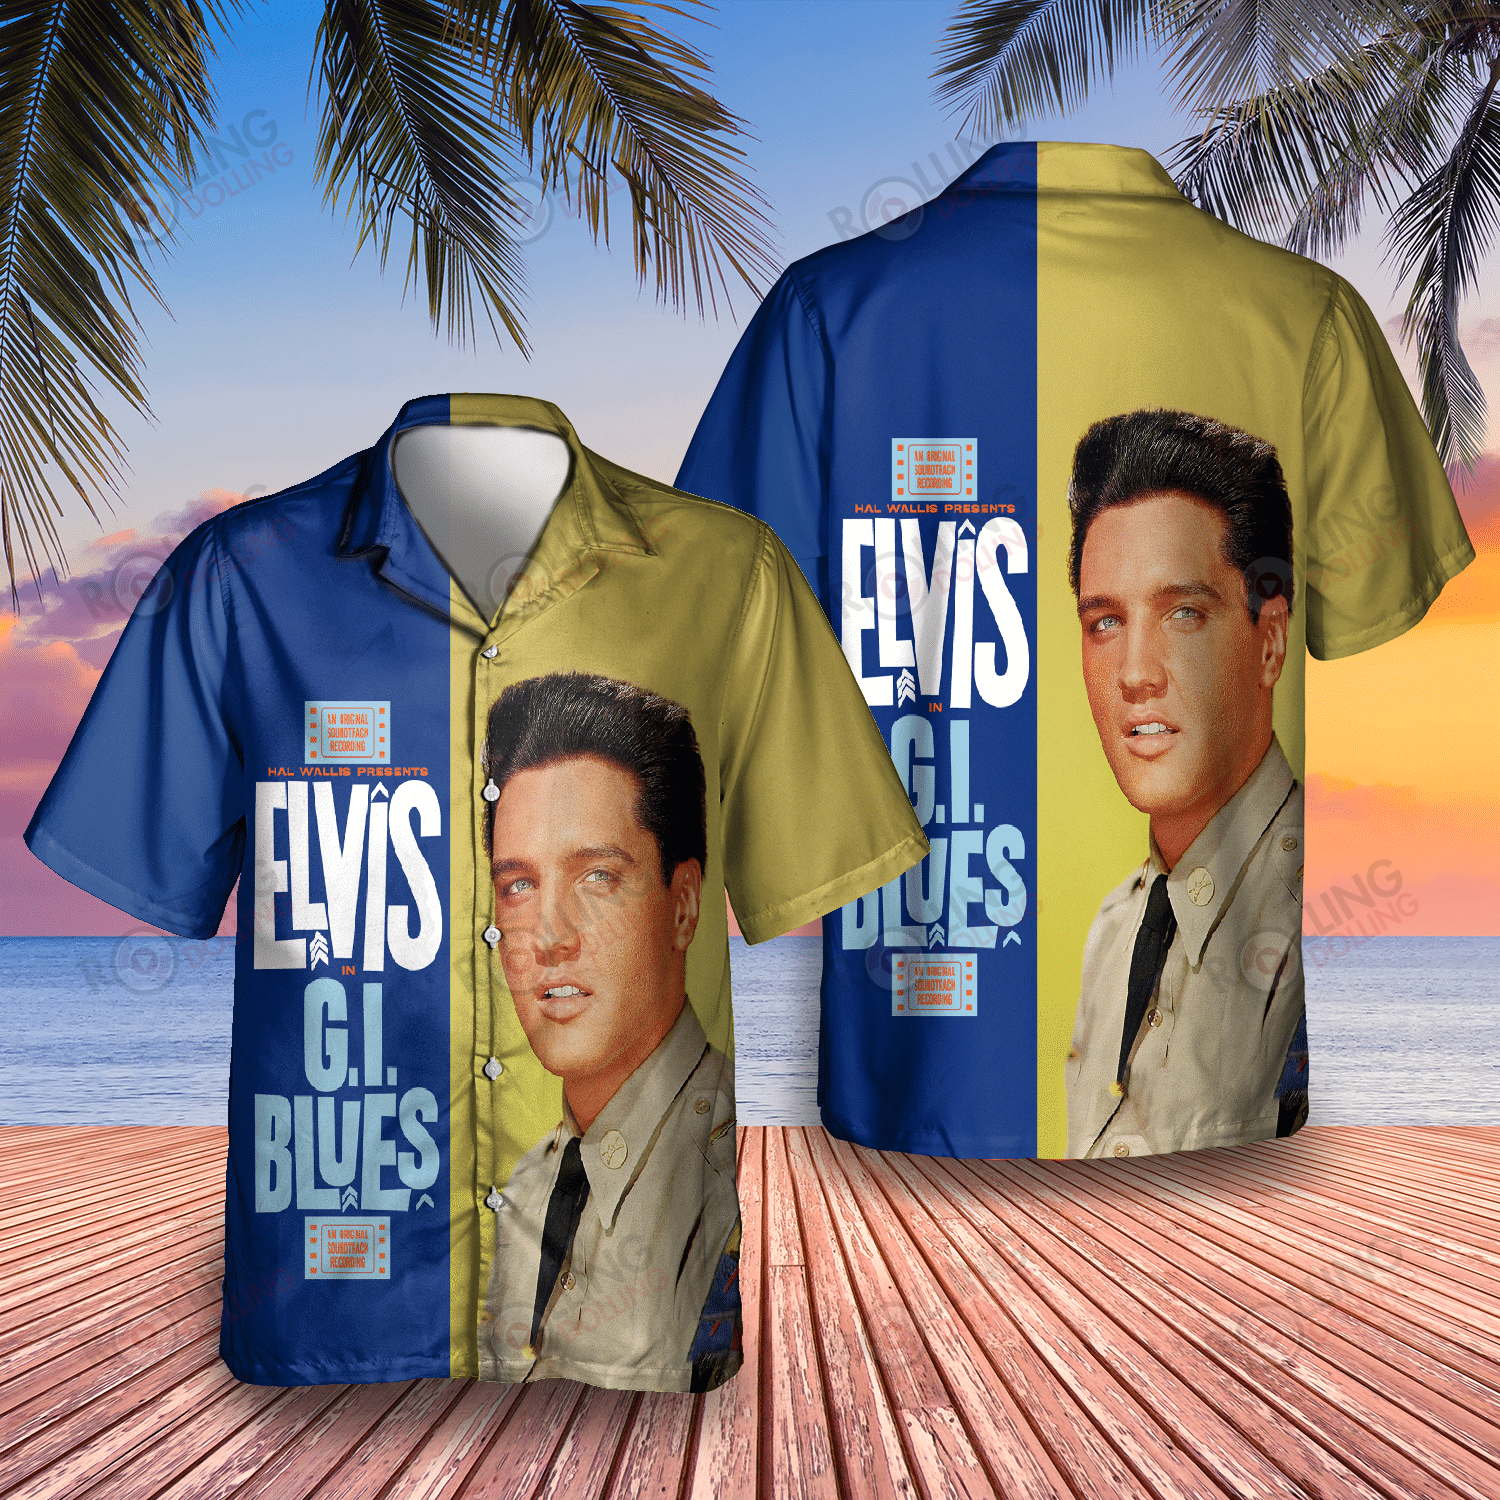 HOT Elvis Presley G.I. Blues Album Tropical Shirt2